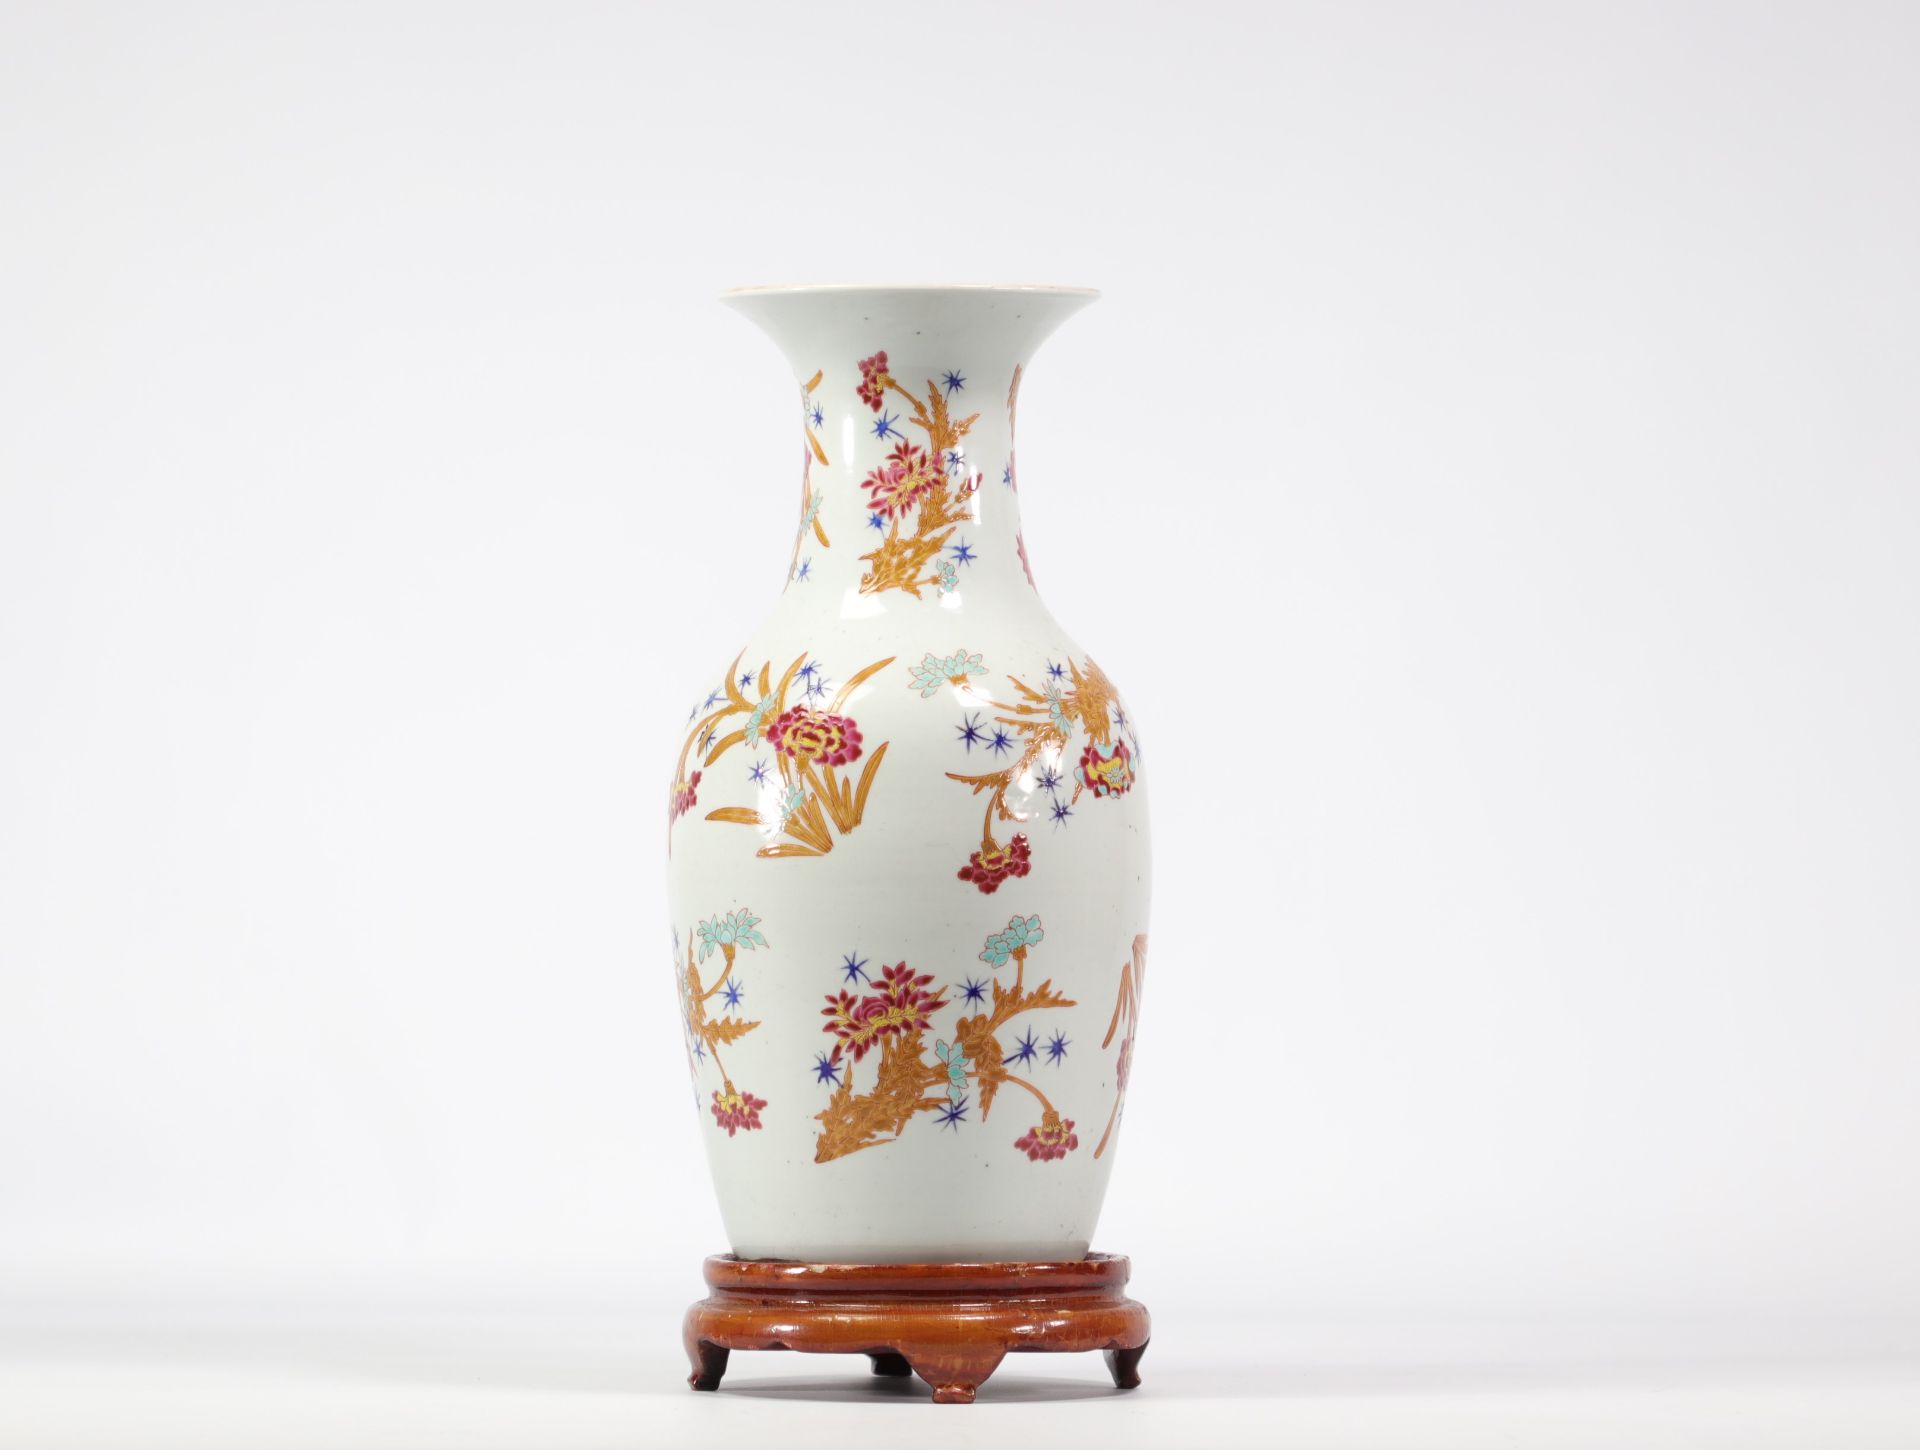 Famille rose porcelain vase with floral design on a white background